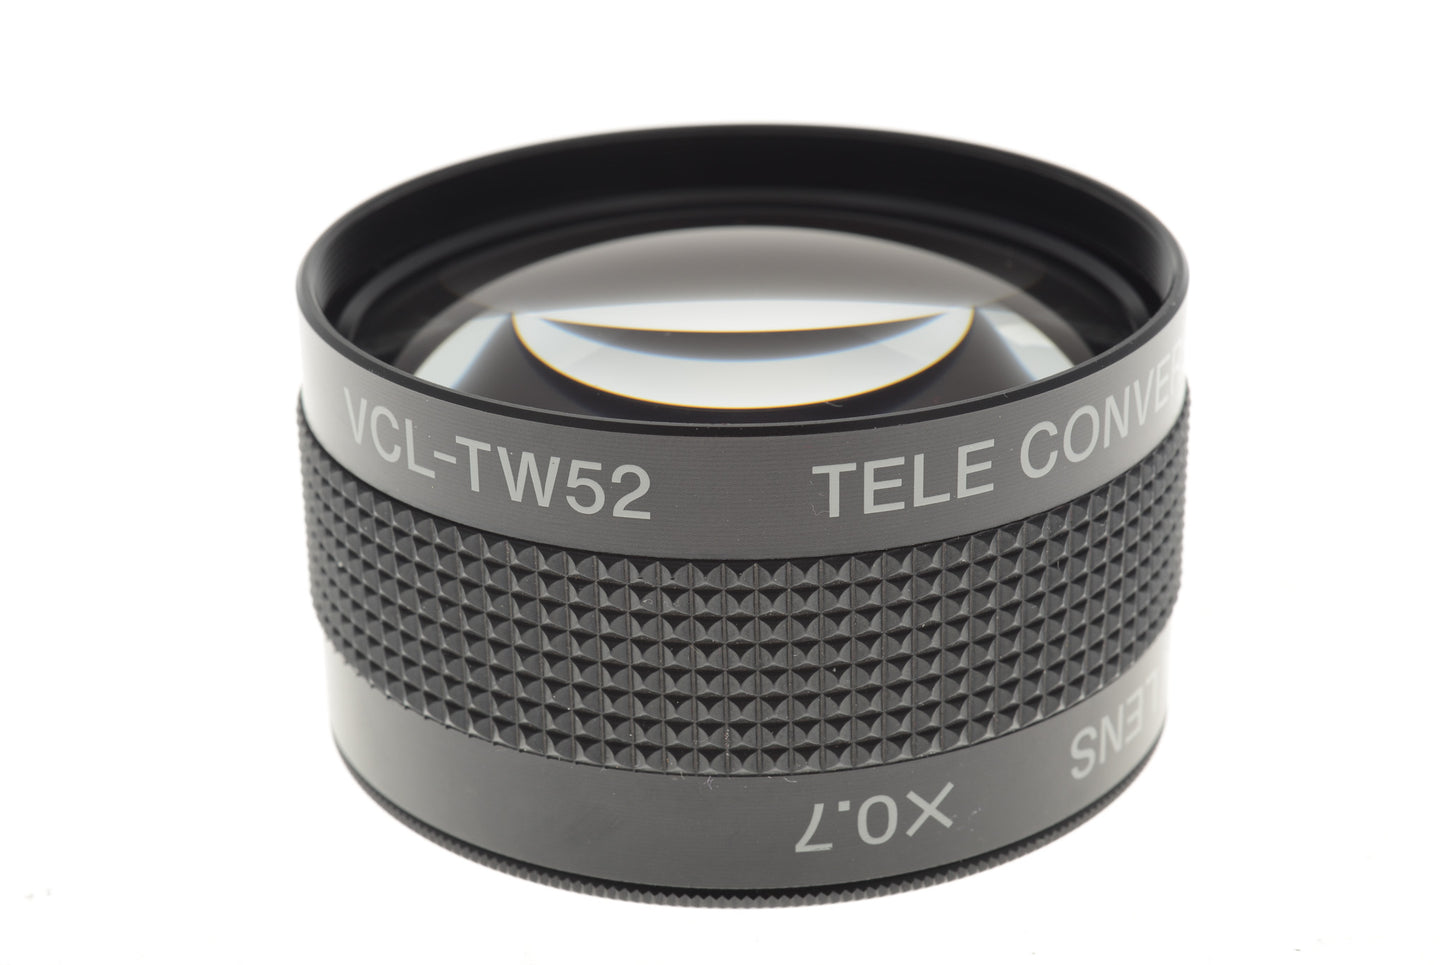 Sony VCL-TW52 Tele/Wide Conversion Lens